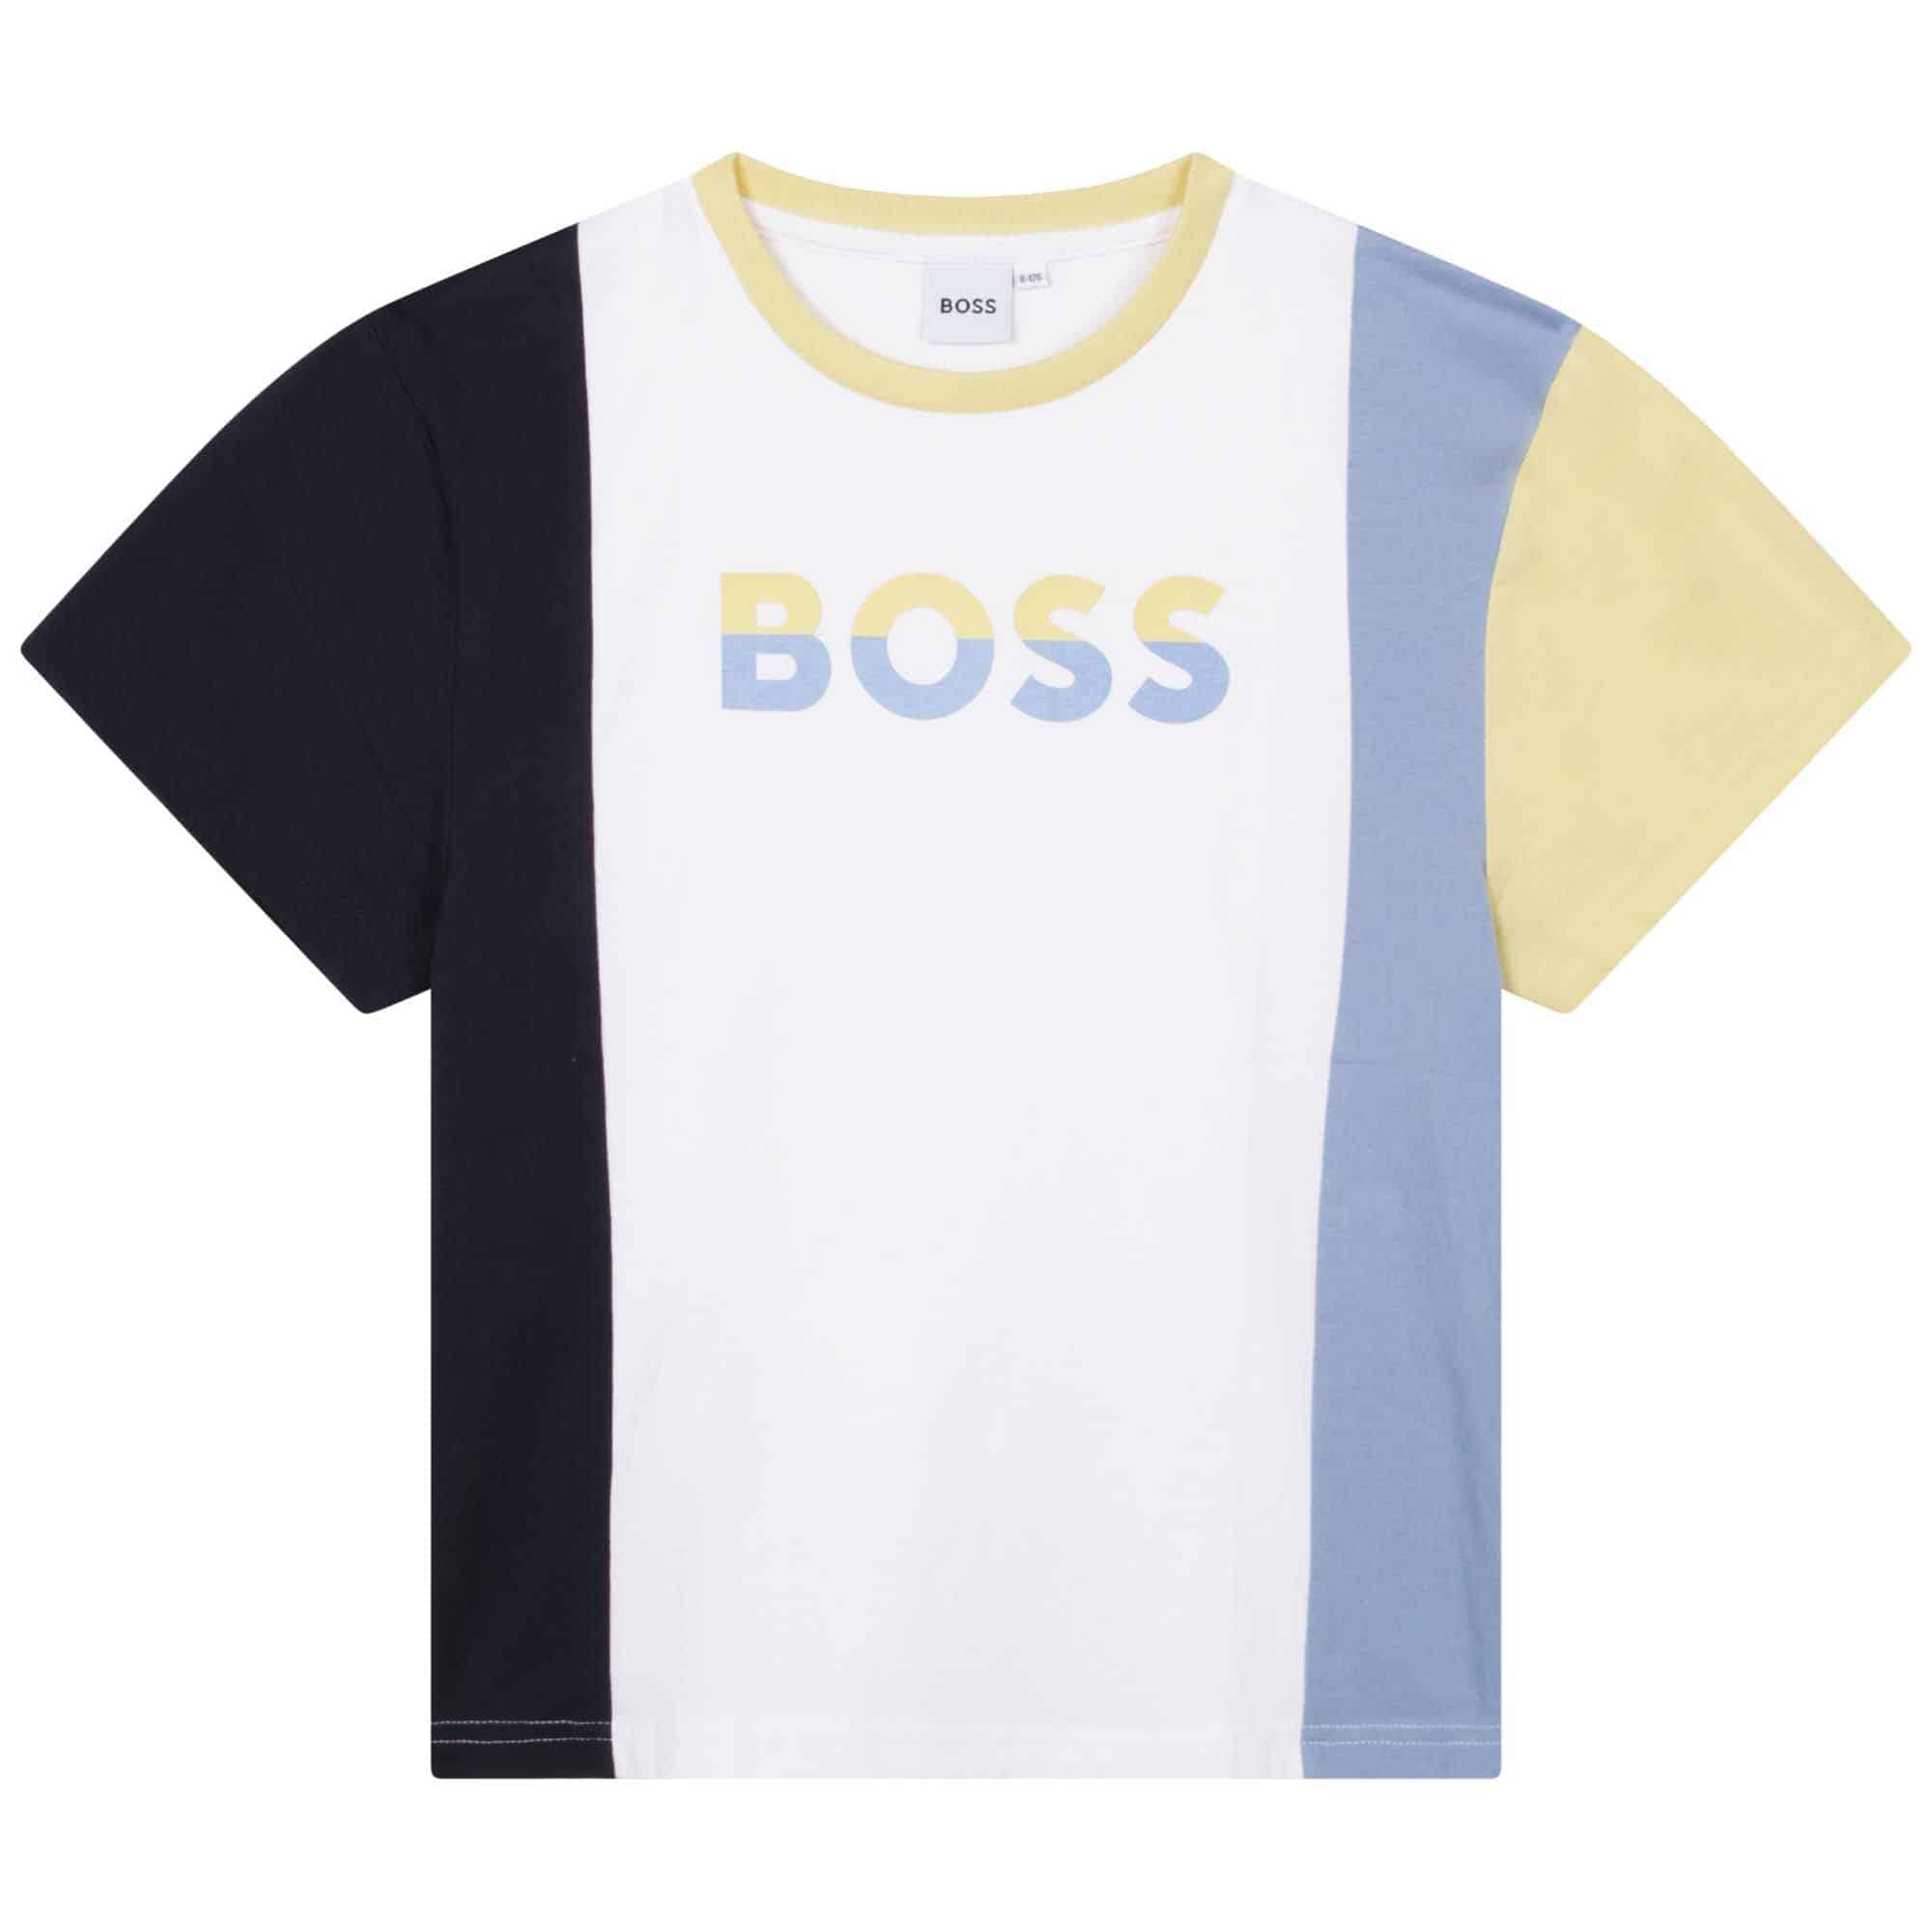 Boss boys tshirt in pale blue, lemon and black